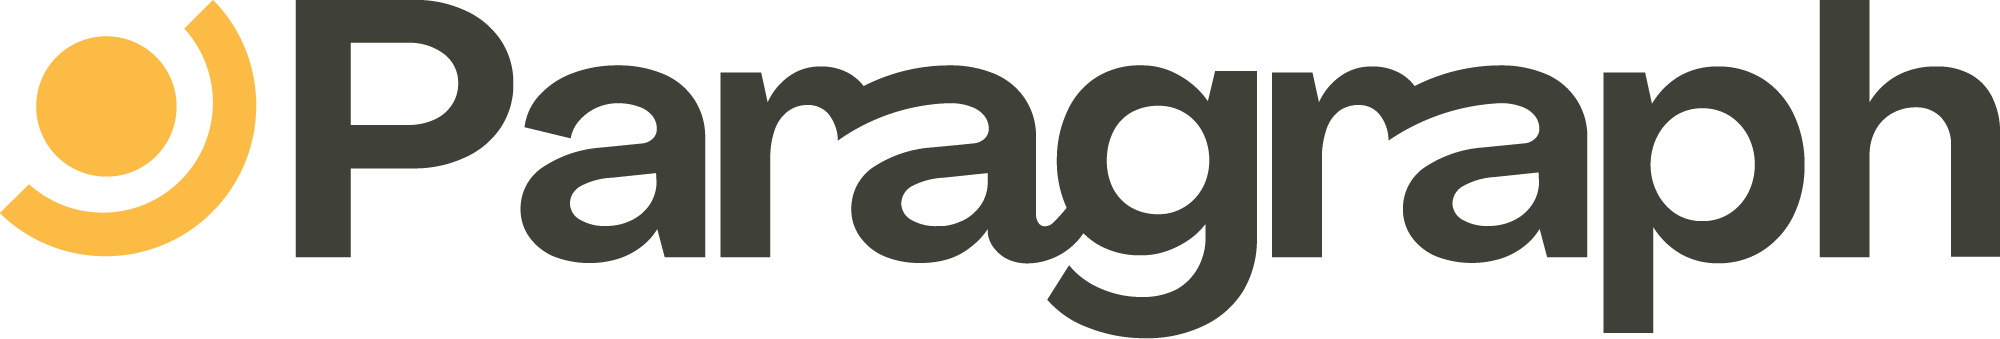 Paragraph Services logo